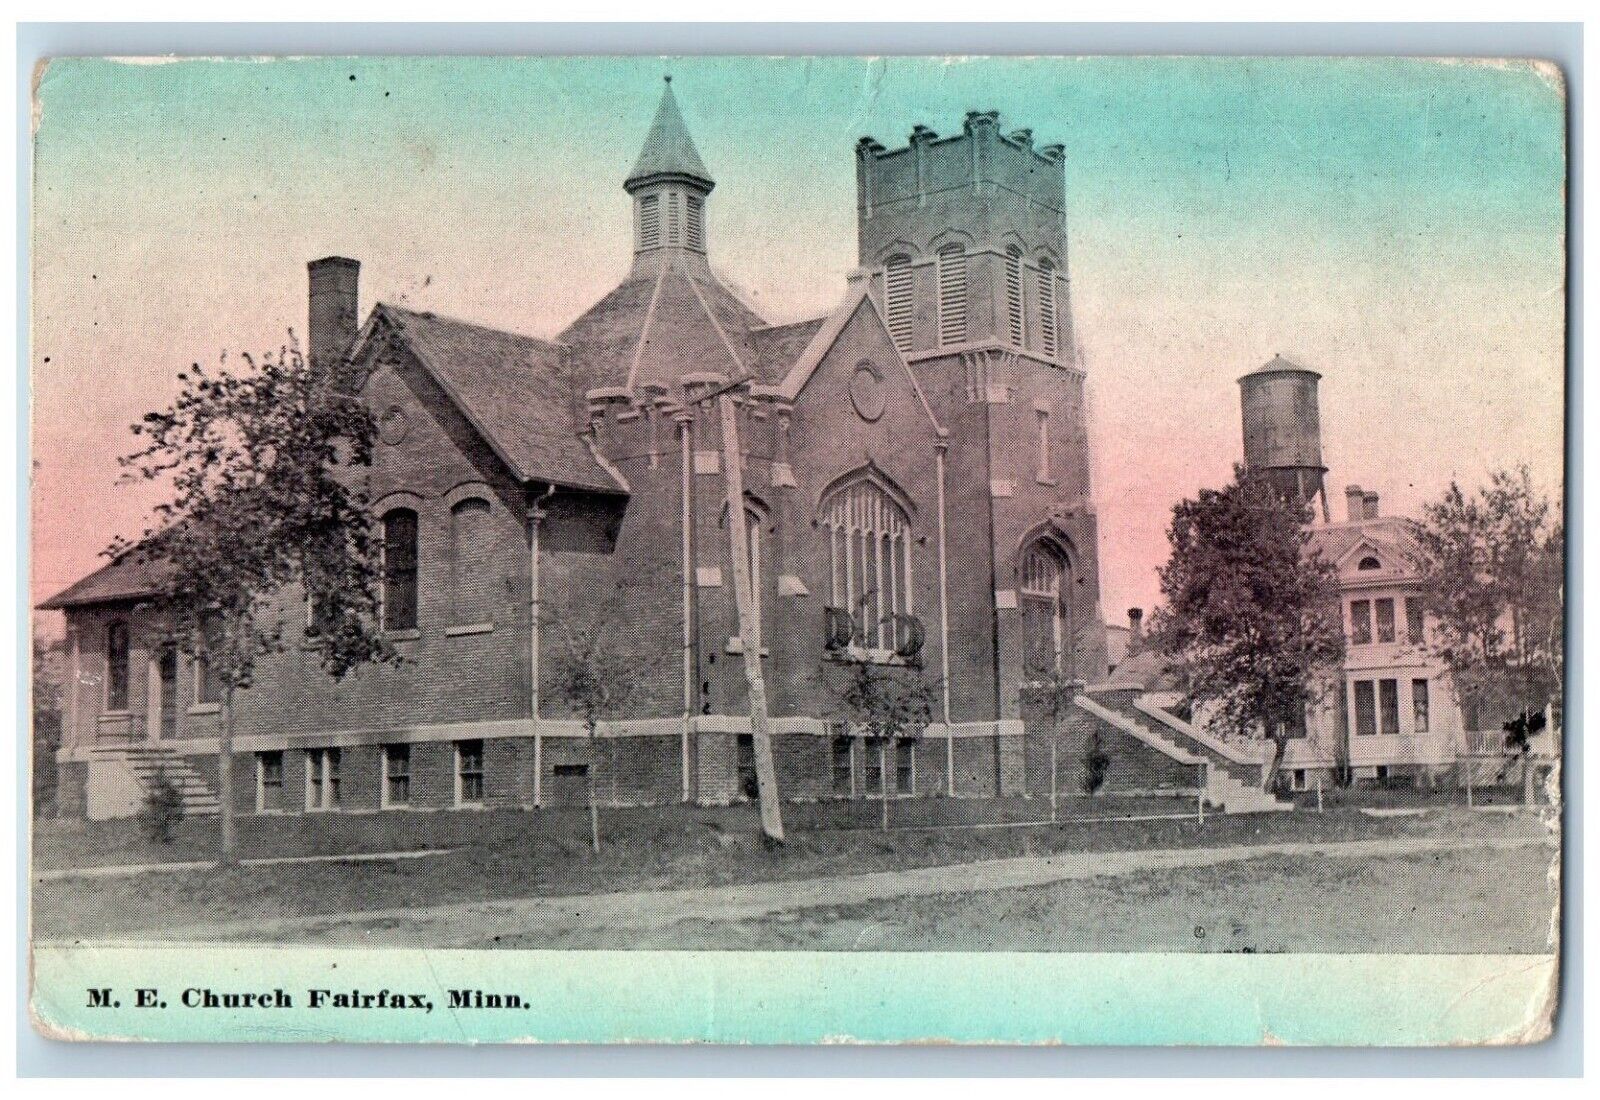 Fairfax Minnesota Postcard M.E. Church Exterior Building c1908 Vintage Antique